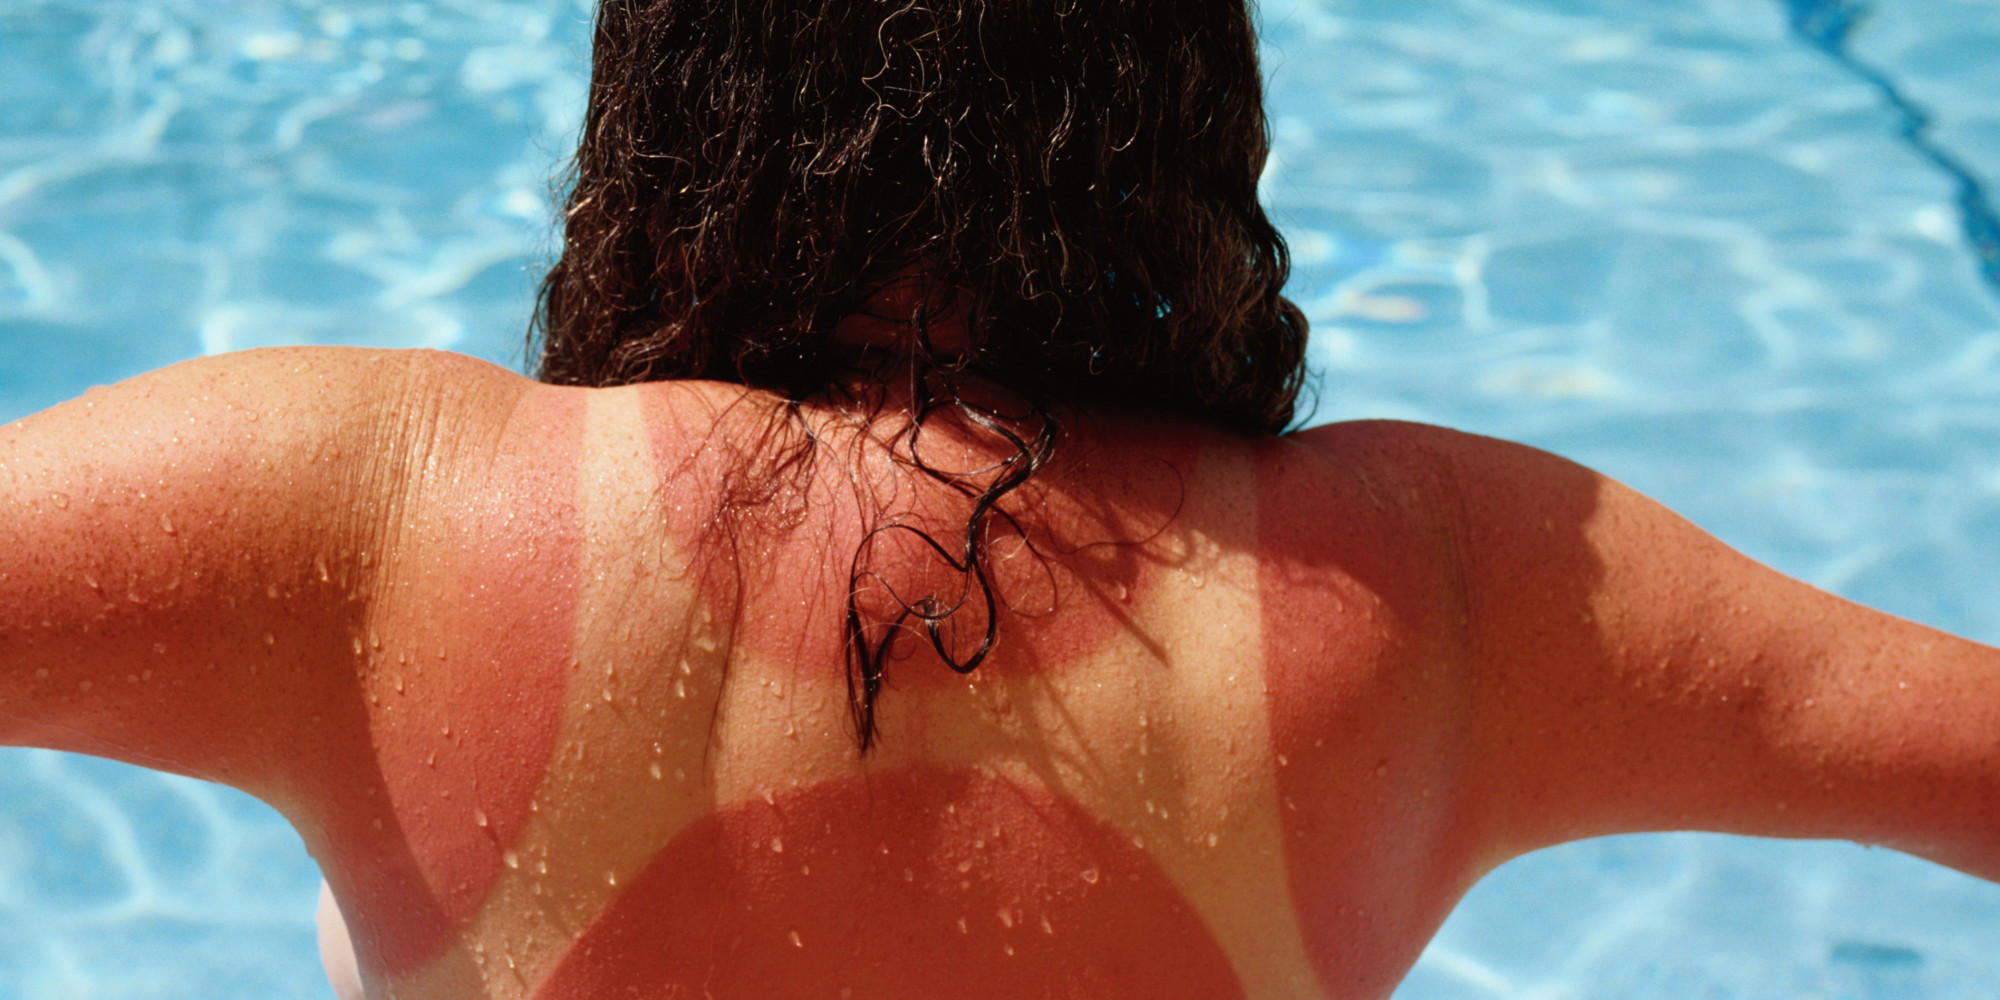 Cornstarch-and-water-to-treat-sunburn